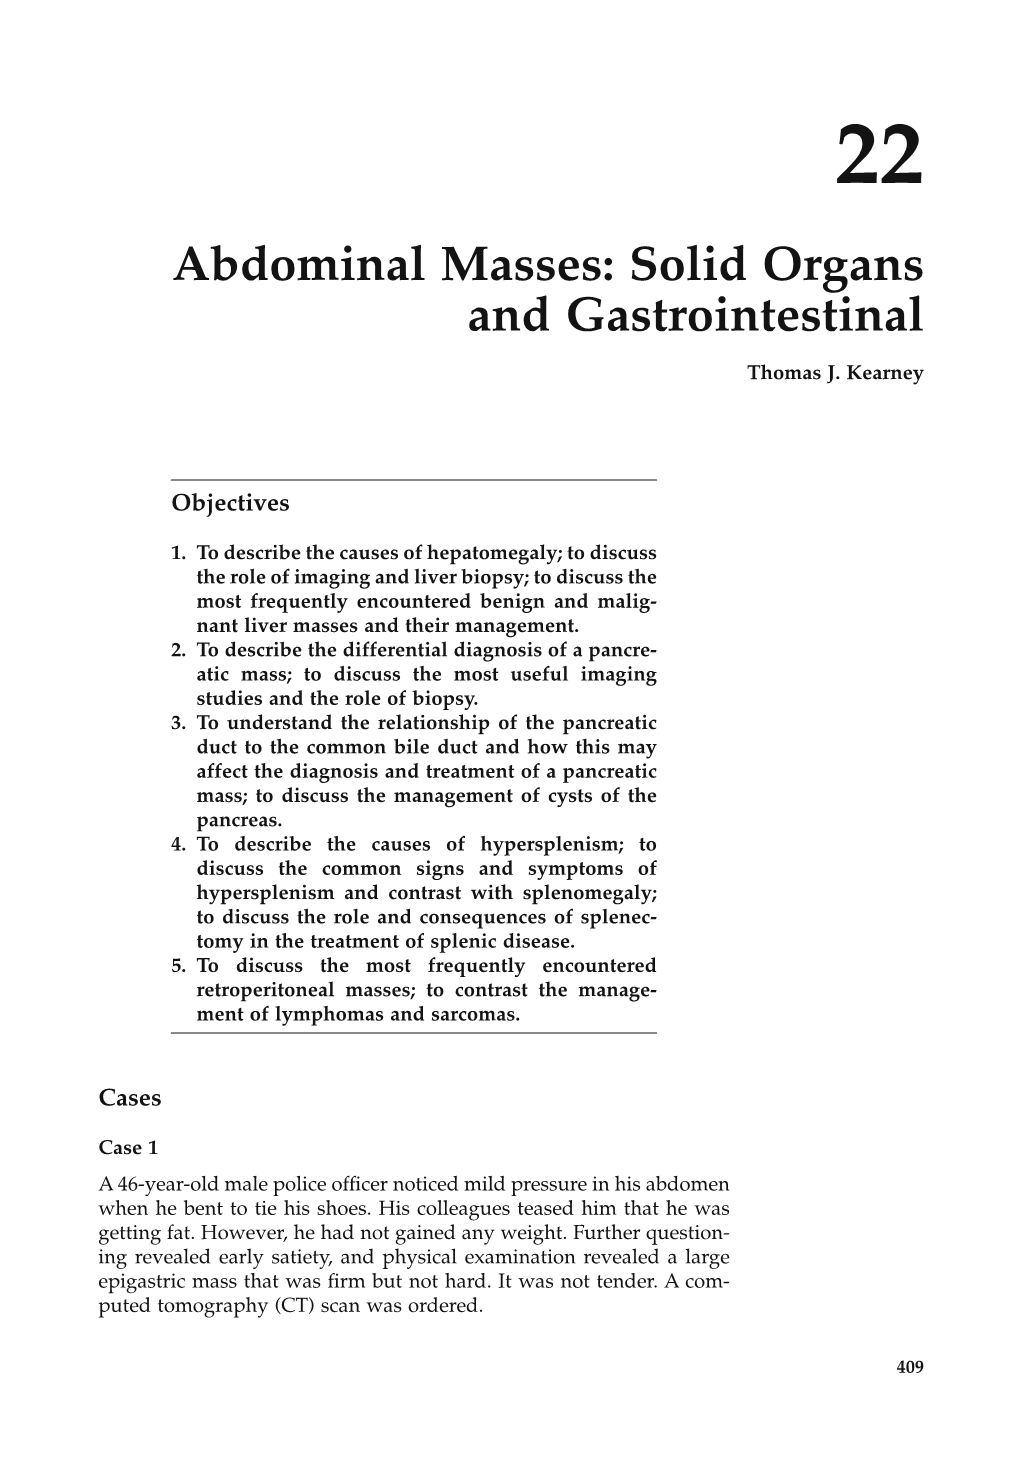 Abdominal Masses: Solid Organs and Gastrointestinal